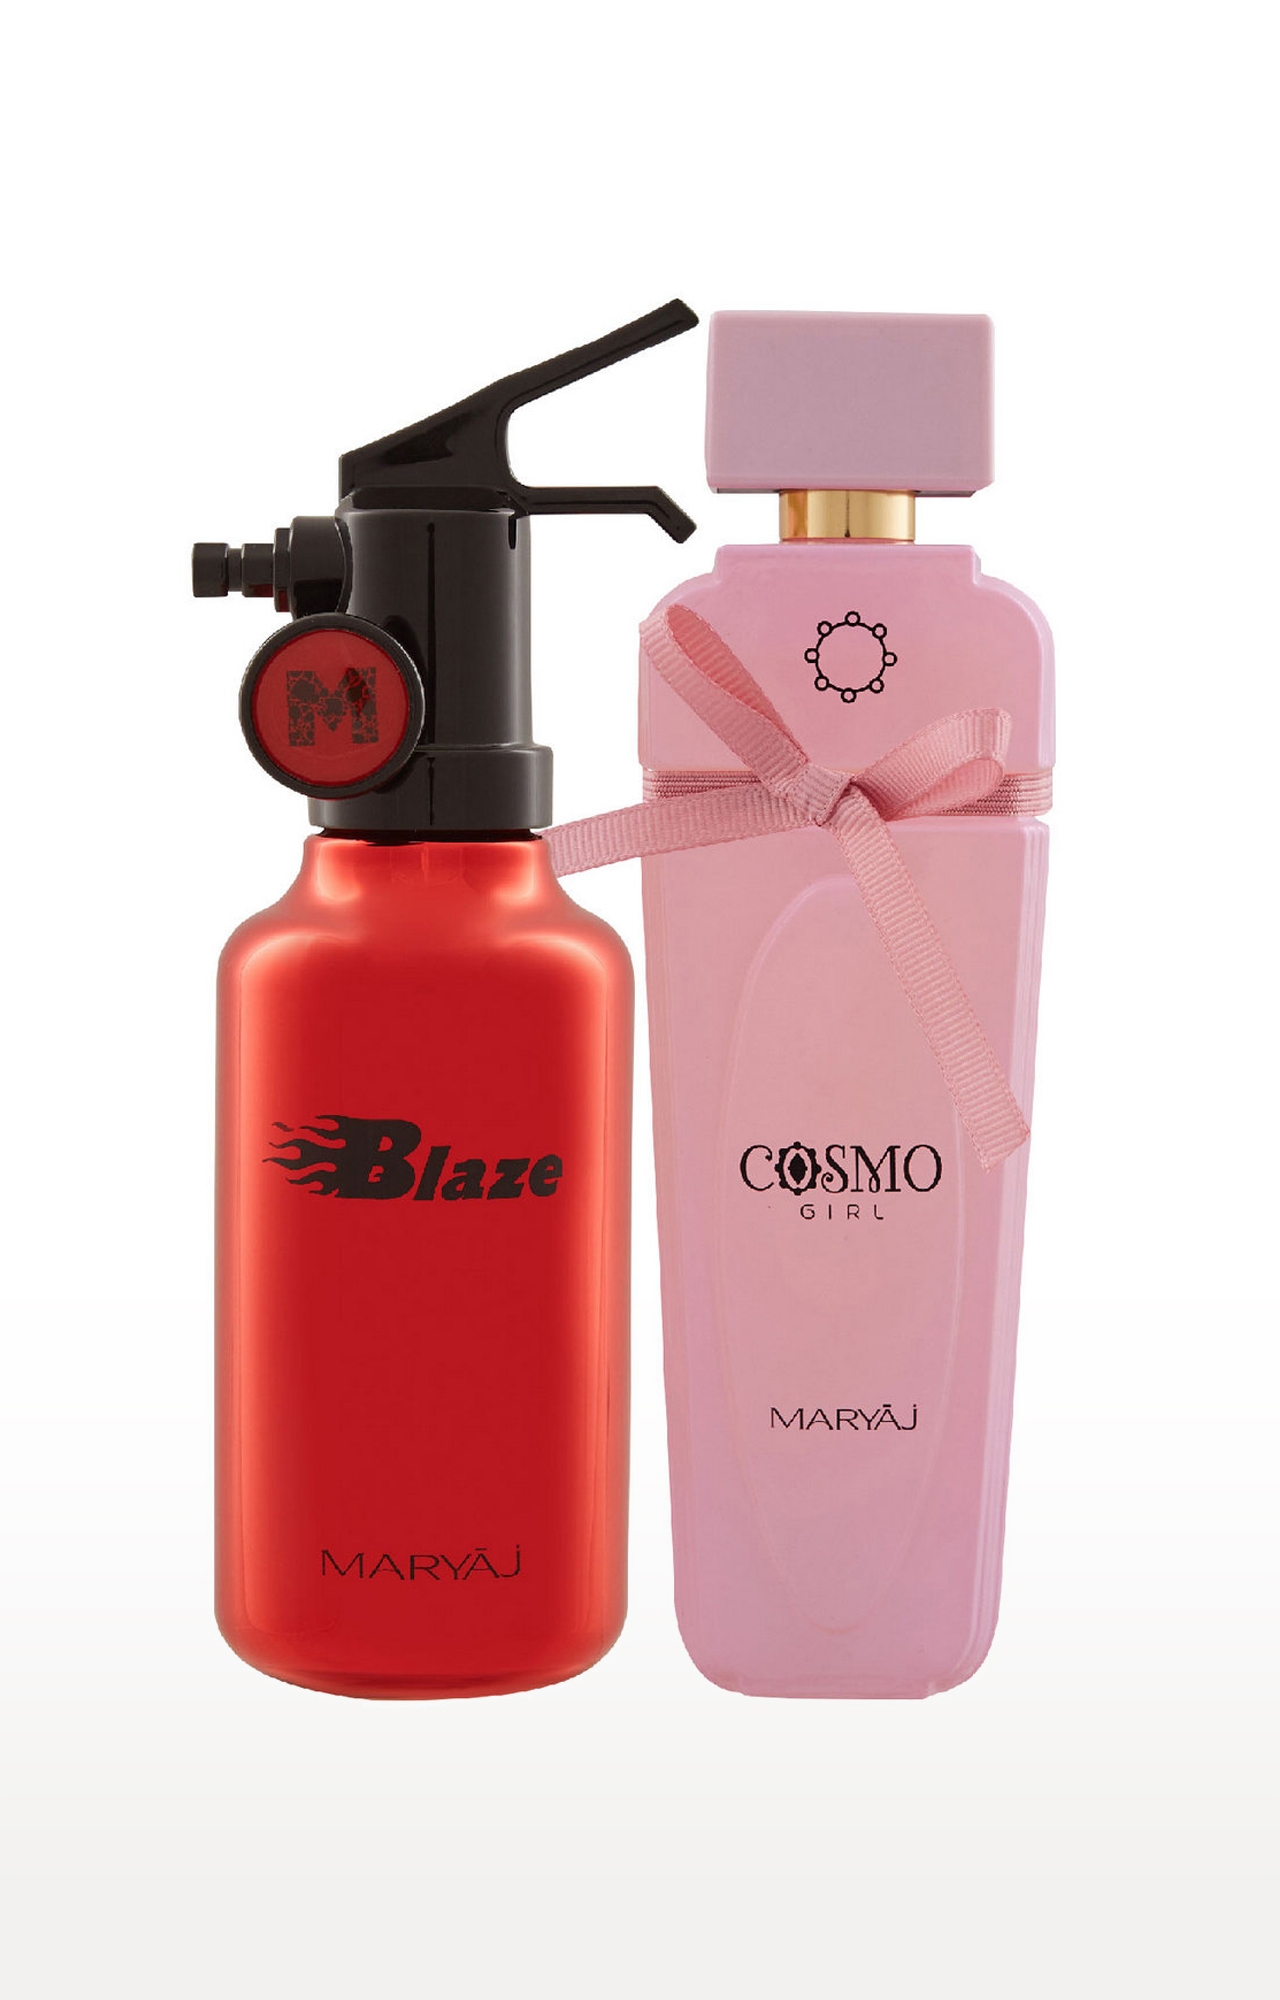 Maryaj | Maryaj Blaze Eau De Parfum Perfume 100ml for Men and Maryaj Cosmo Girl Eau De Parfum Perfume 100ml for WoMen 0